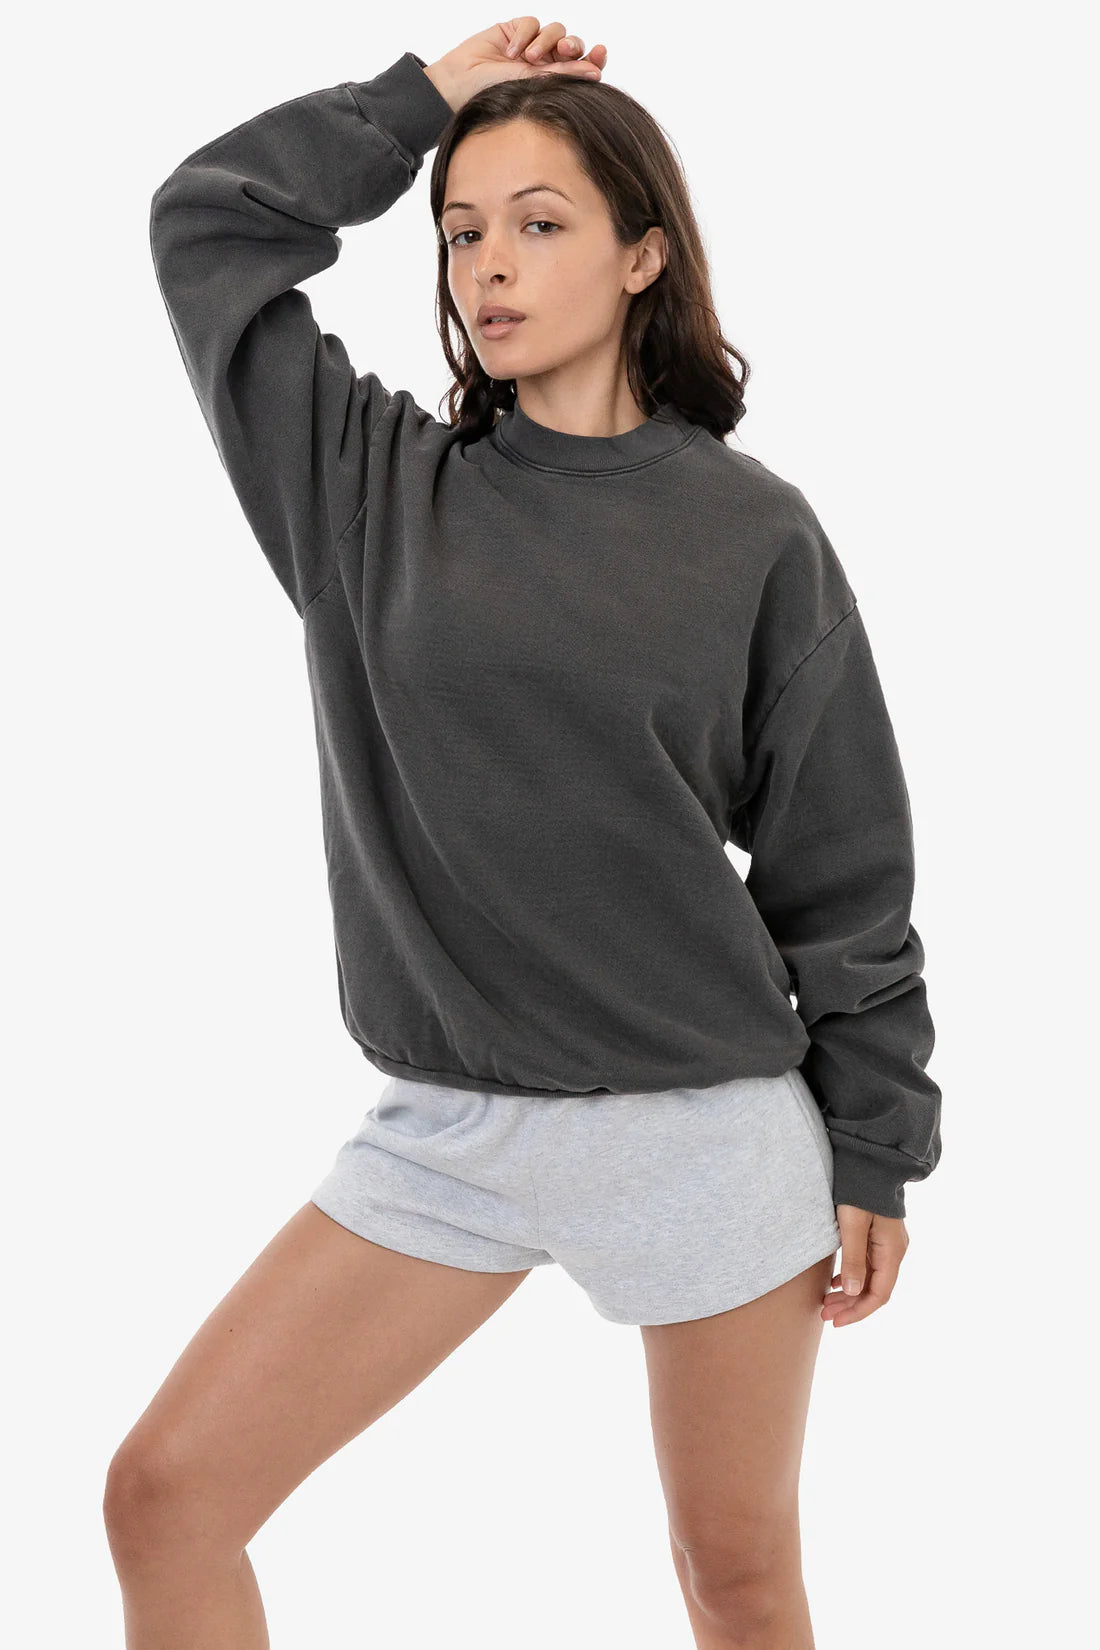 Los Angeles Apparel - HF07GD Mix - Garment Dye Heavy Fleece Pullover Crewneck Sweatshirt (New)